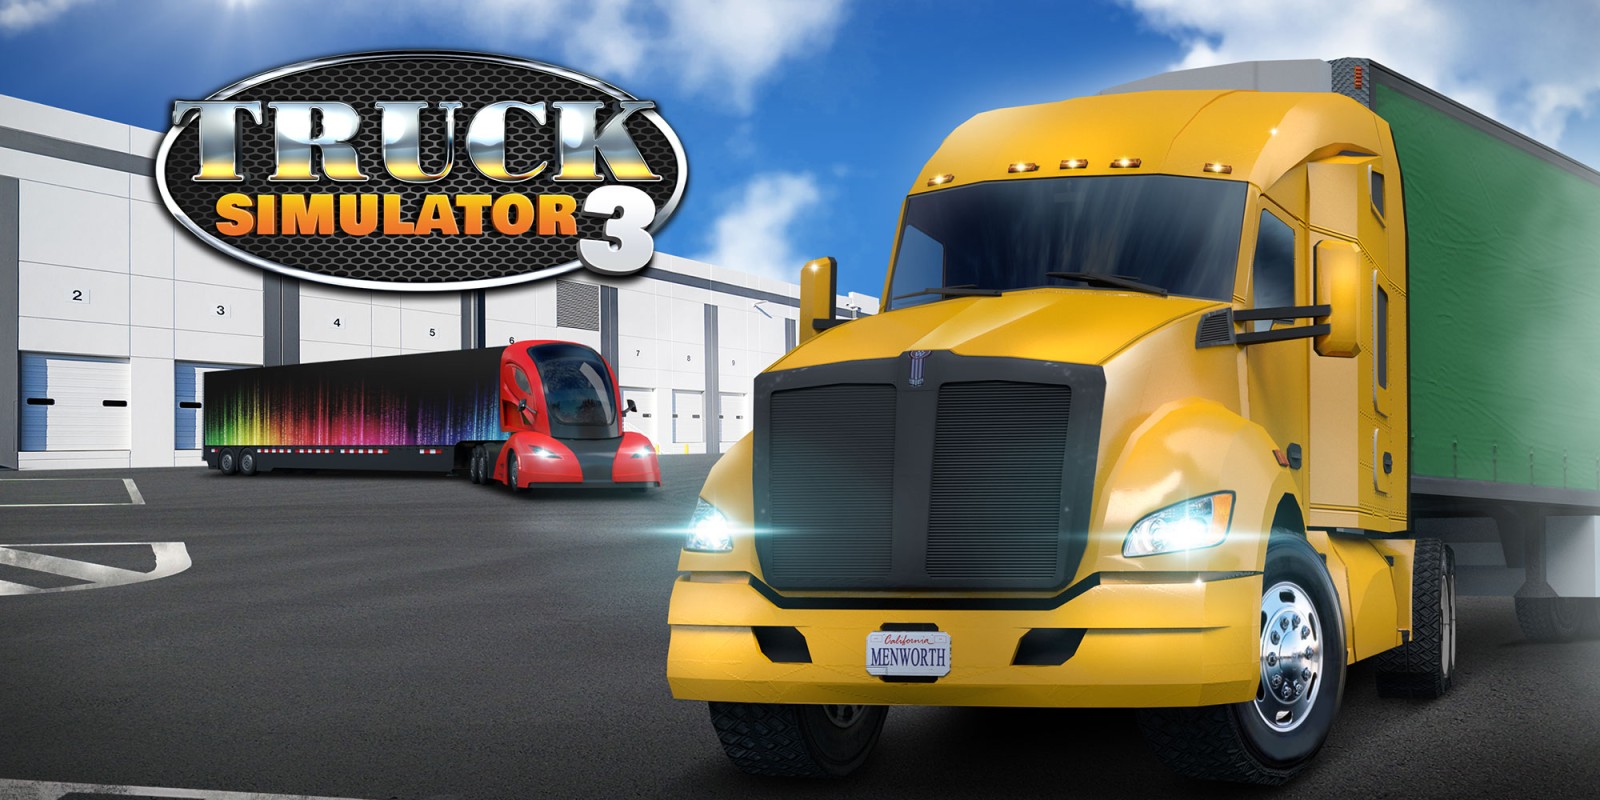 Euro Truck Simulator 3 Free Download Full Version PC in 2023